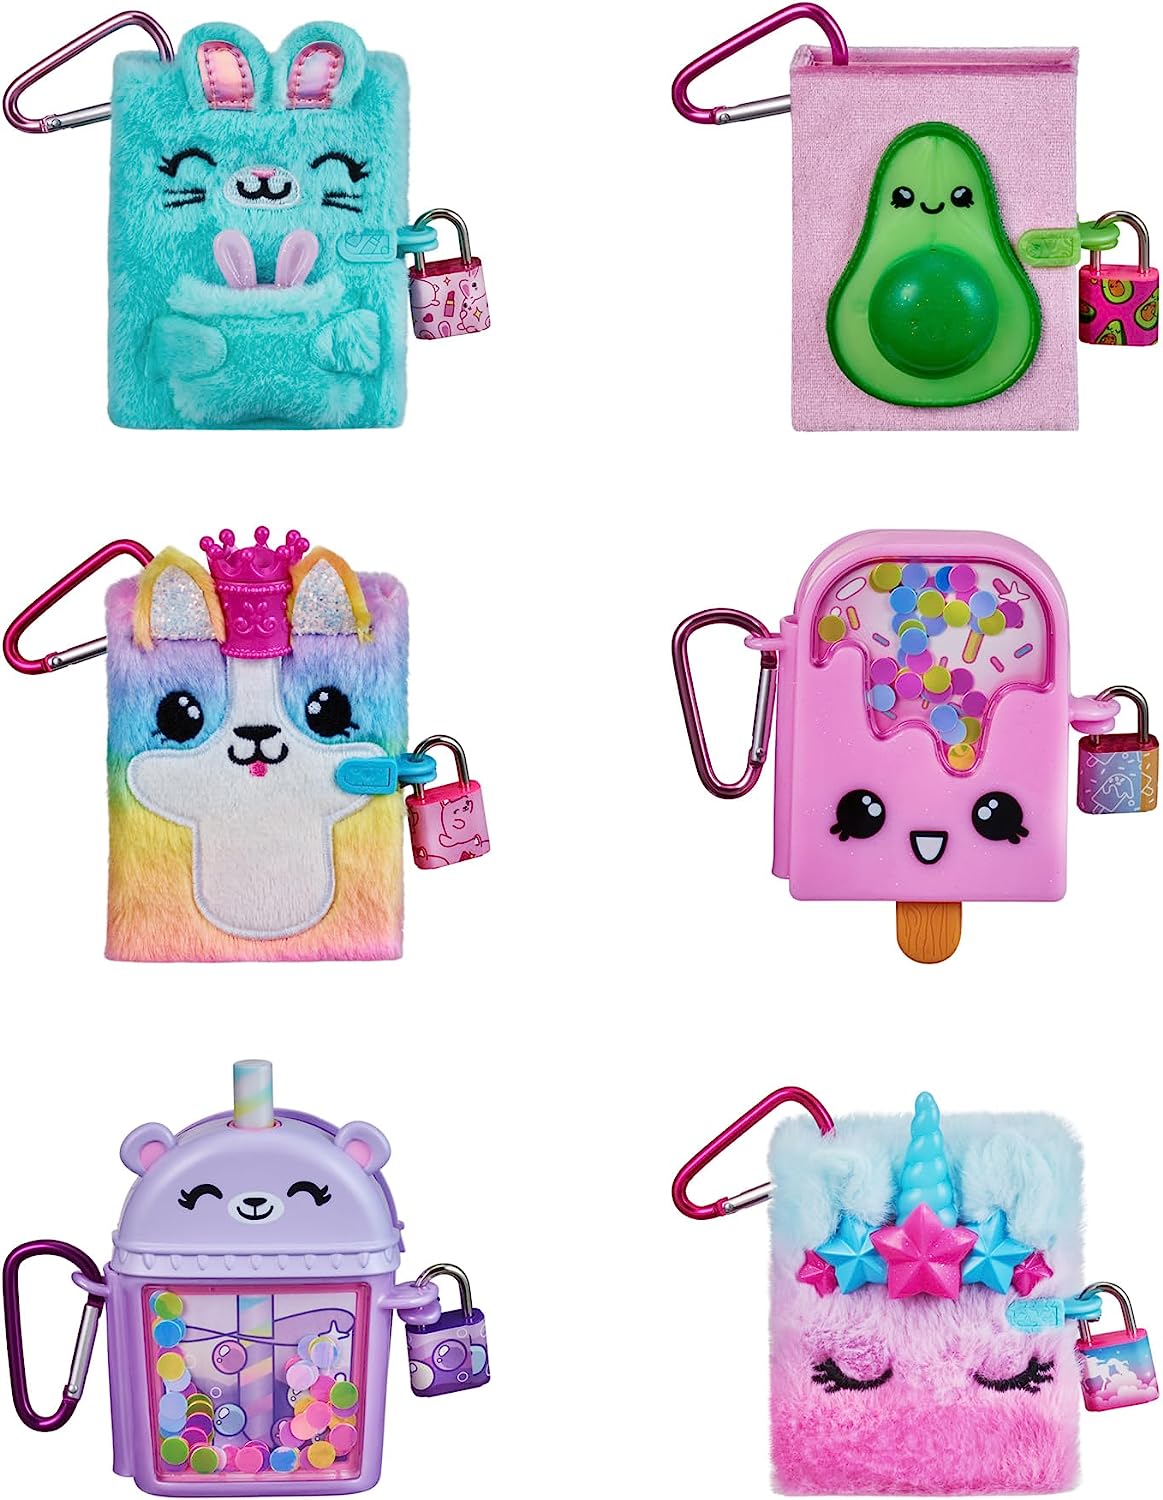 Real Littles Miniature Disney bags - The Little Mermaid, Tinkerbell, Raya,  Snow White, Alice in Wonderland, Zombies 3 